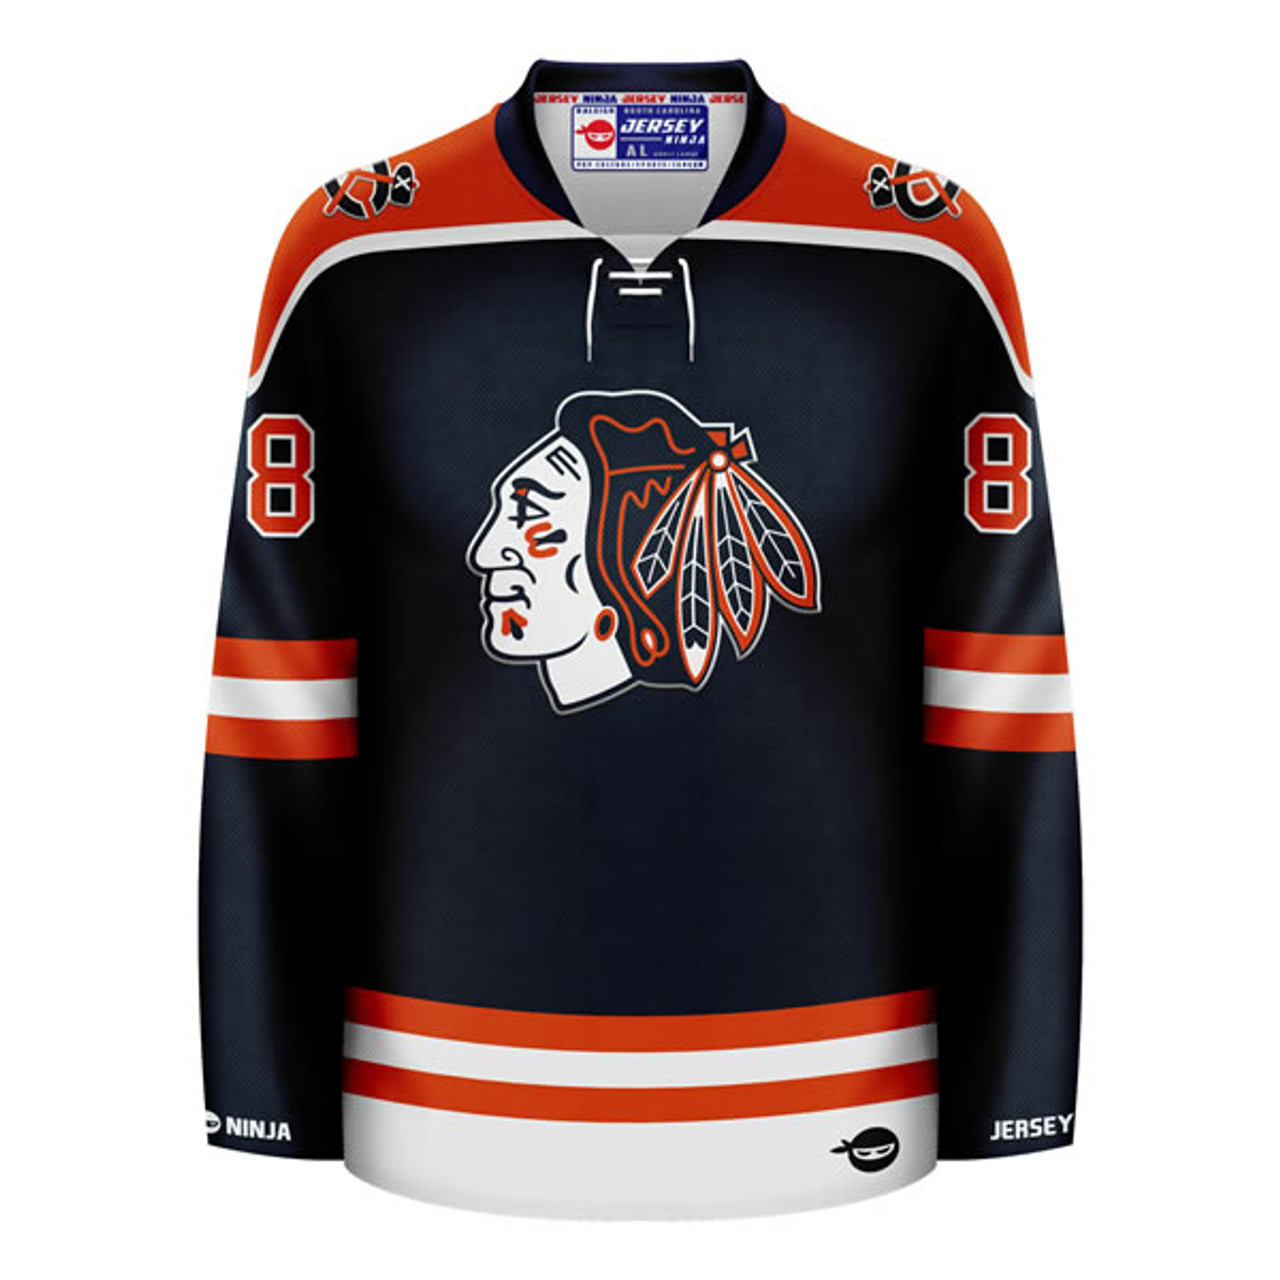 Jersey Ninja - Chicago Bears White Hockey Jersey